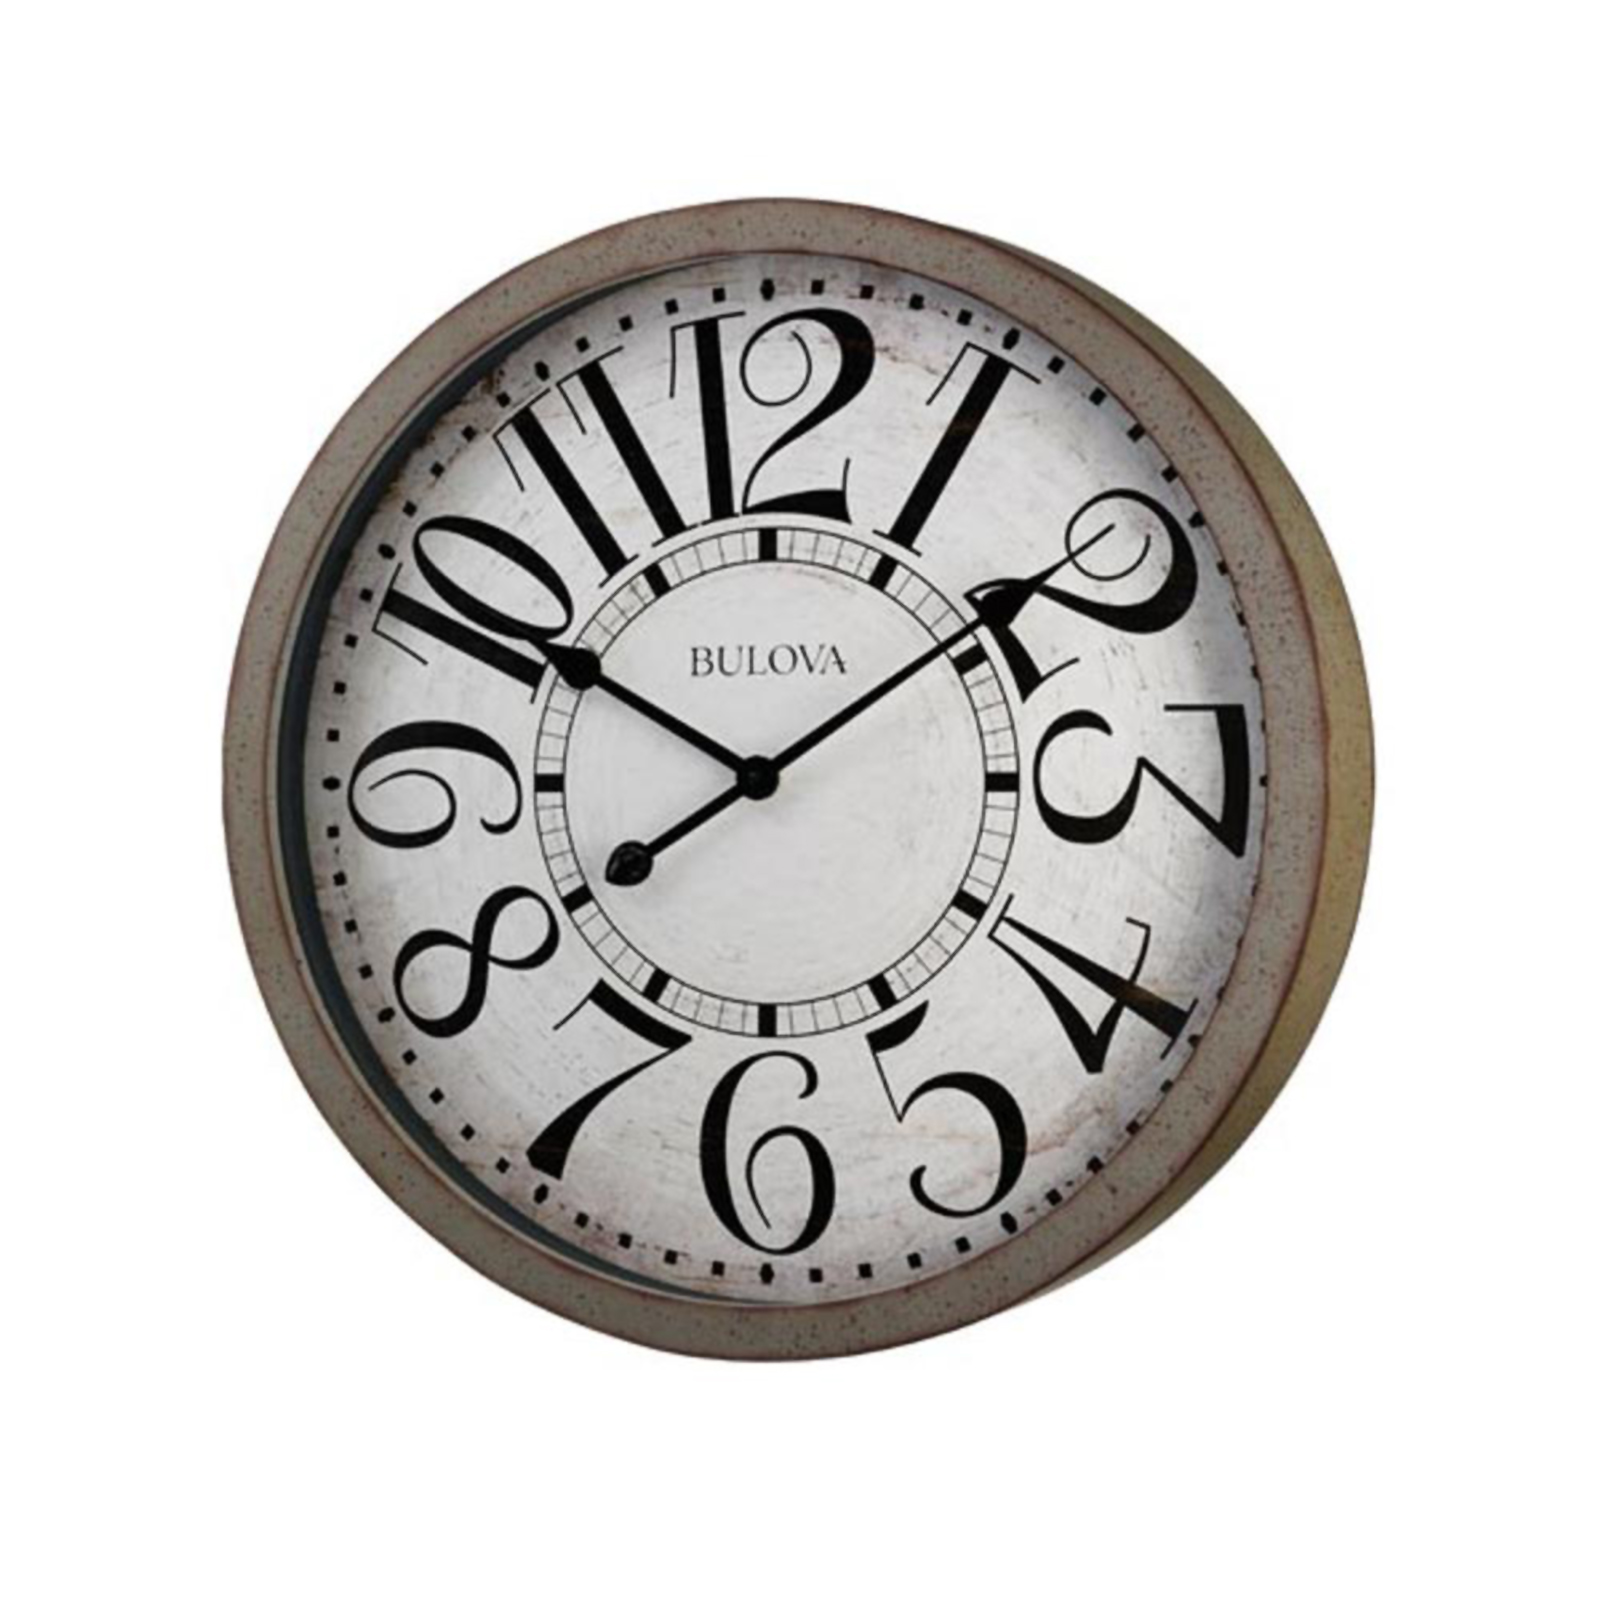 Bulova Westwood Round Wooden Wall Clock - Antique Gray